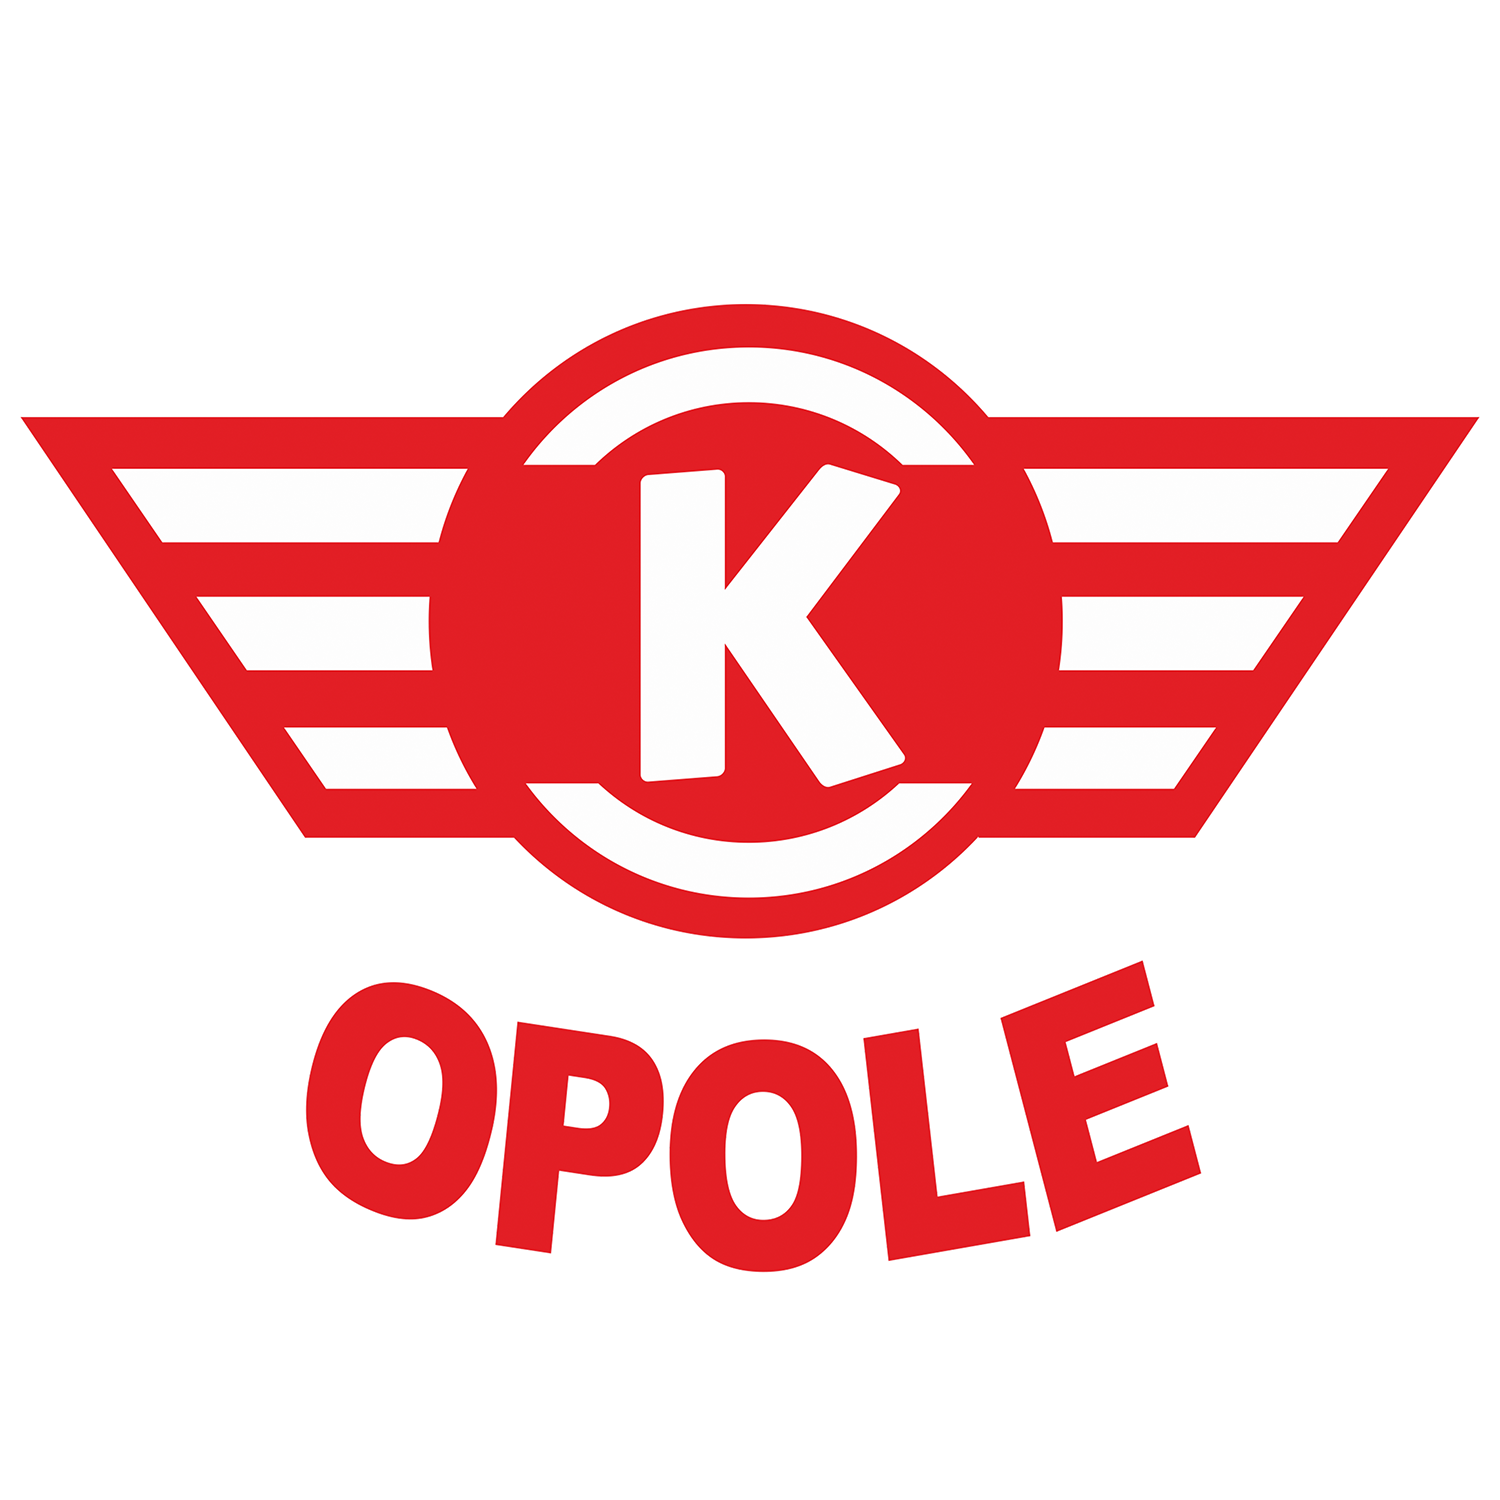 OK Bedmet Kolejarz Opole Logo